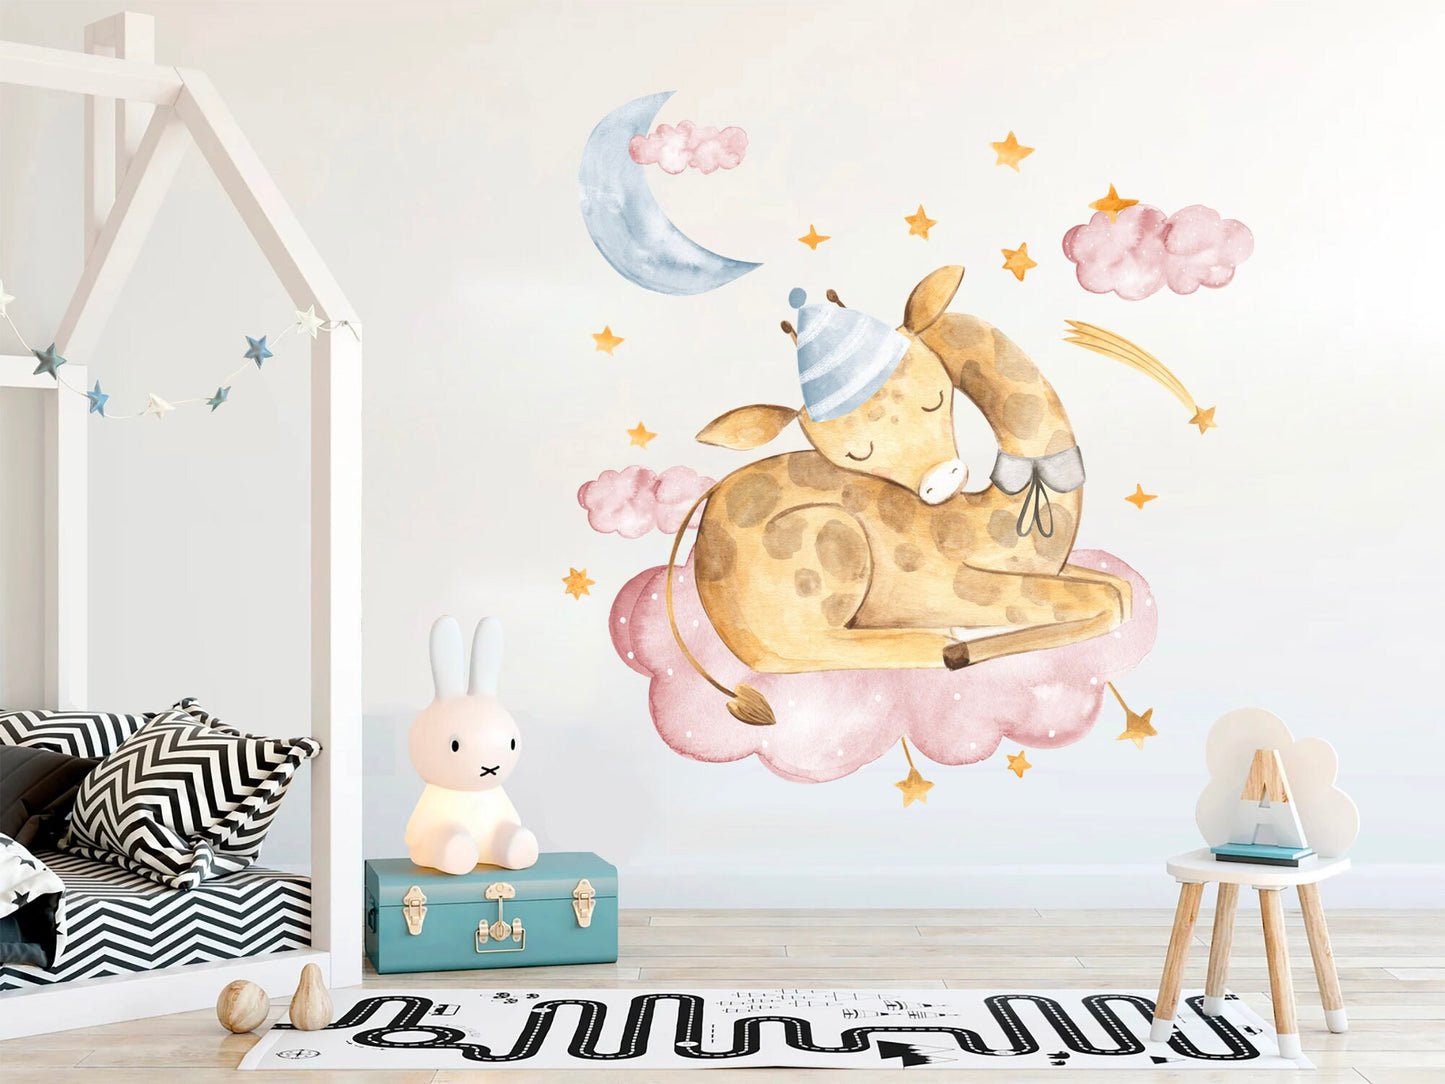 Sleeping Giraffe on Pink Cloud Wall Decals - Moon, Stars, Watercolor Style - Girls' Room Decor - BR064